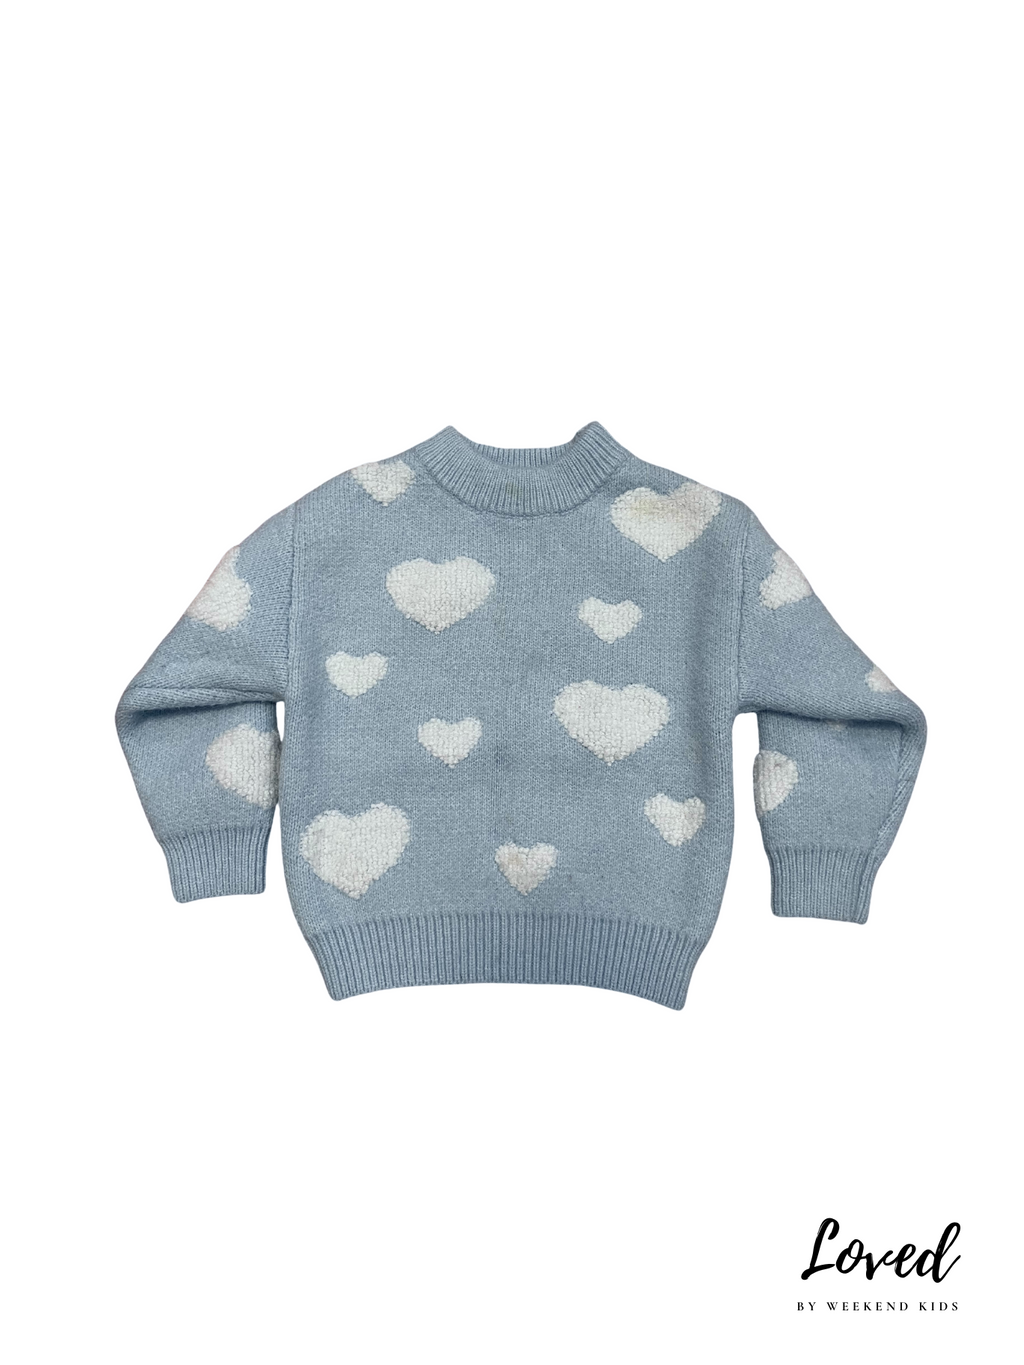 Sky Sweater (Loved)